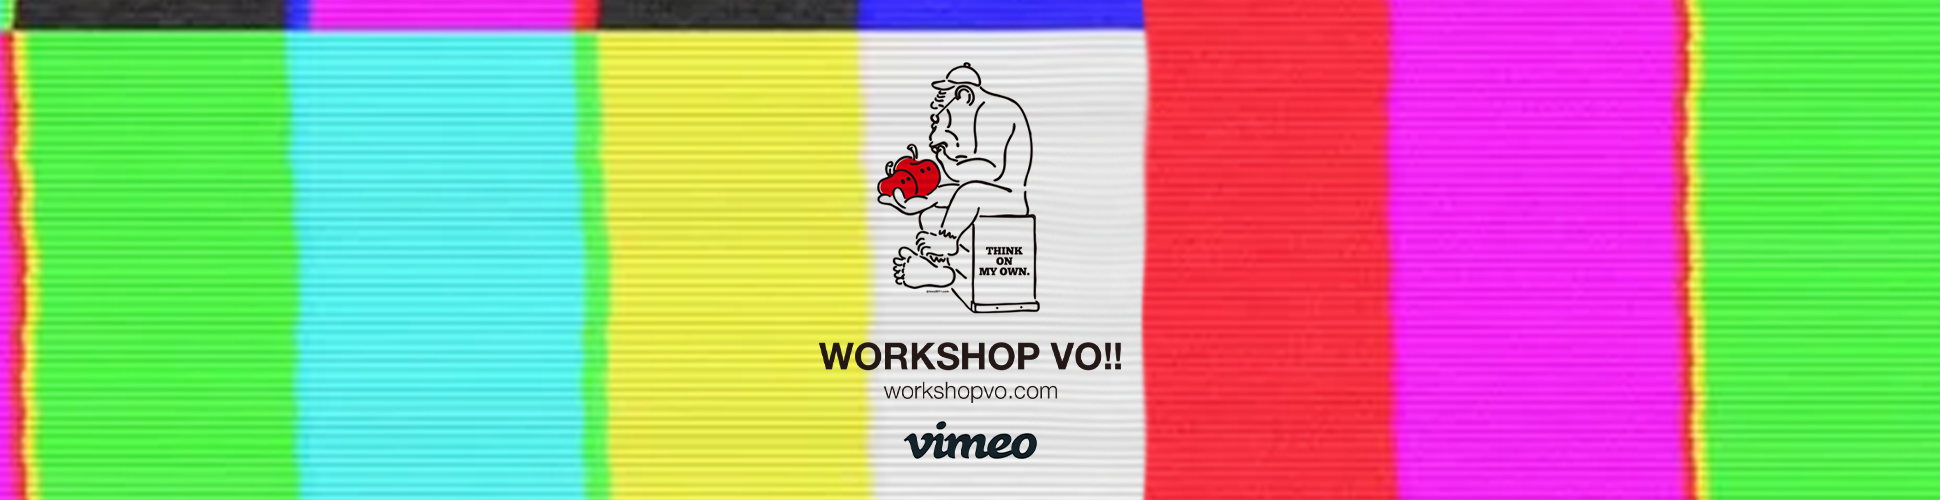 vimeo-1940-500-banner